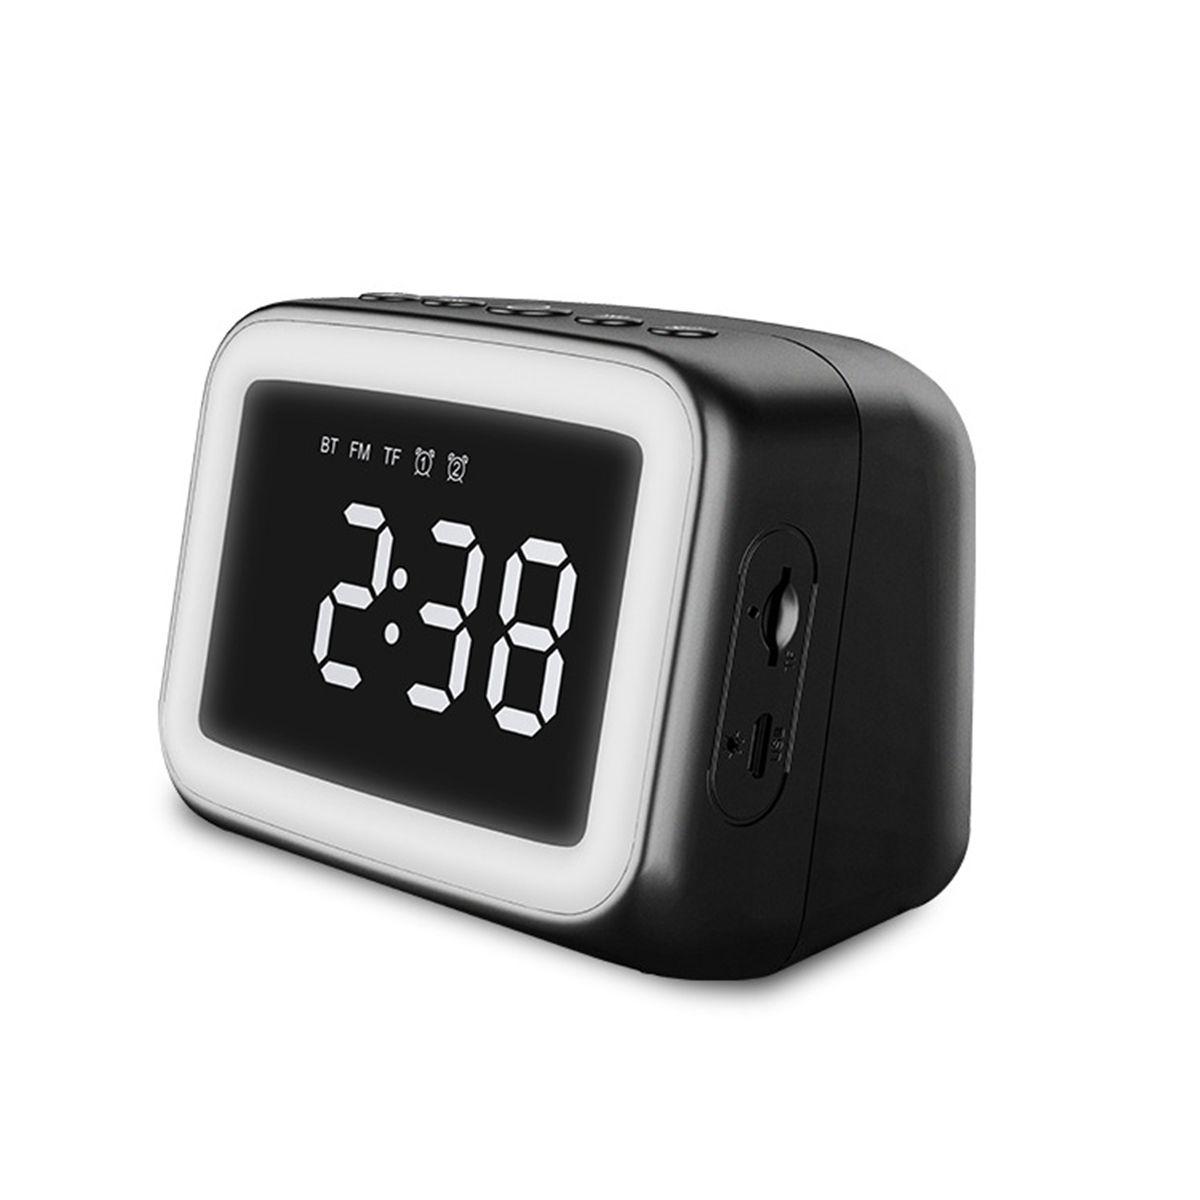 Digital-Alarm-Clock-FM-Radio-Wireless-bluetooth-50-LED-Mirror-With-Speaker-1752623